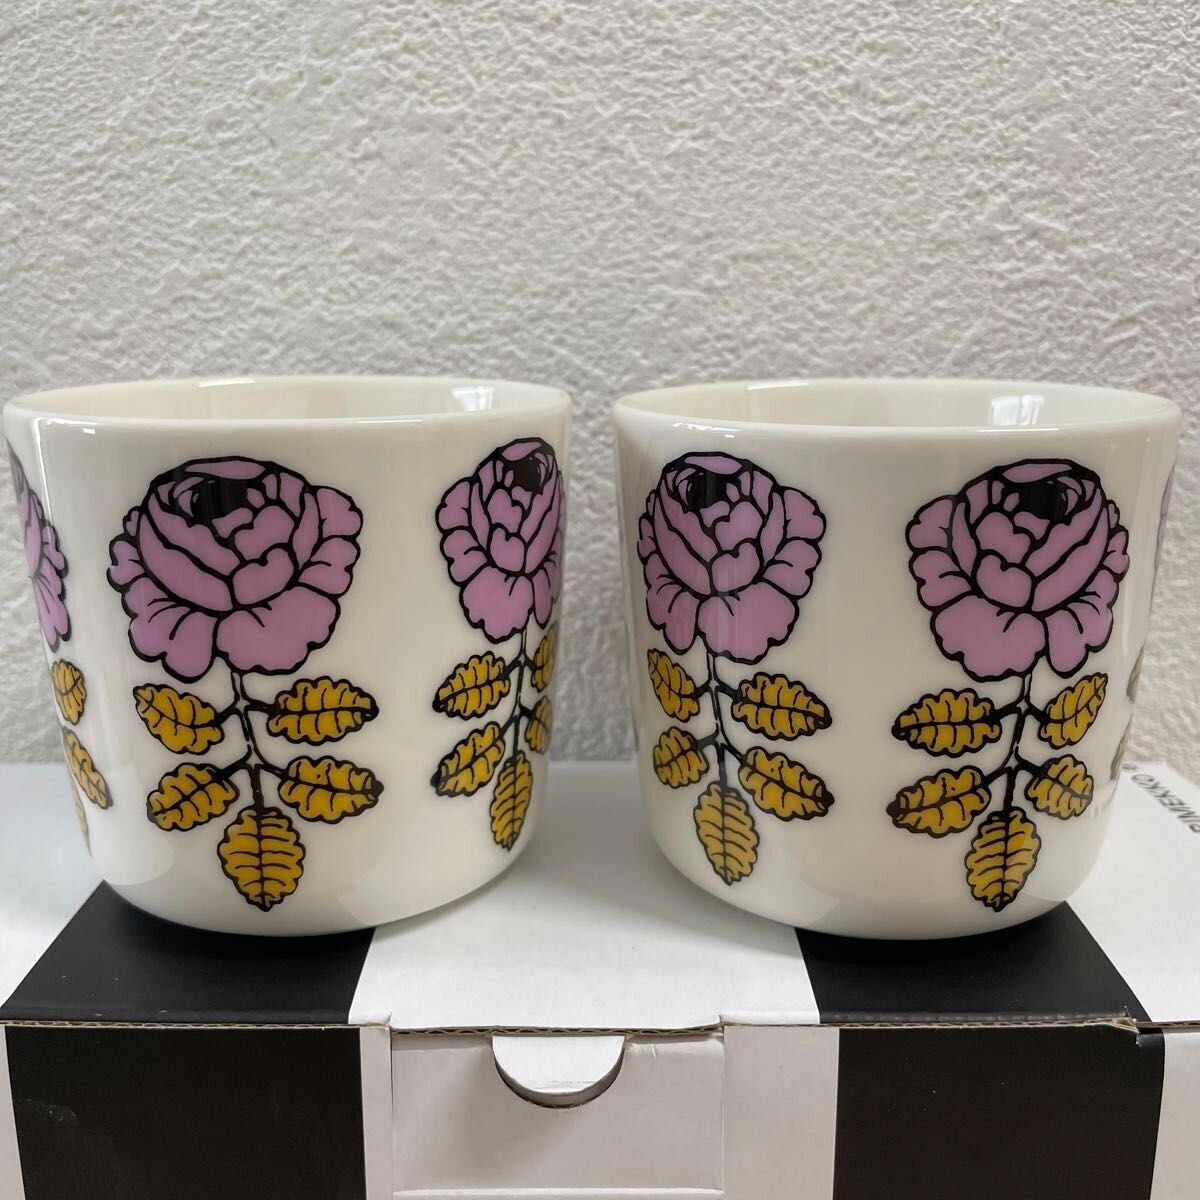 marimekko oiva Vihkiruusu (Wedding Rose) Pair Latte mugs Designed by Maija Isola